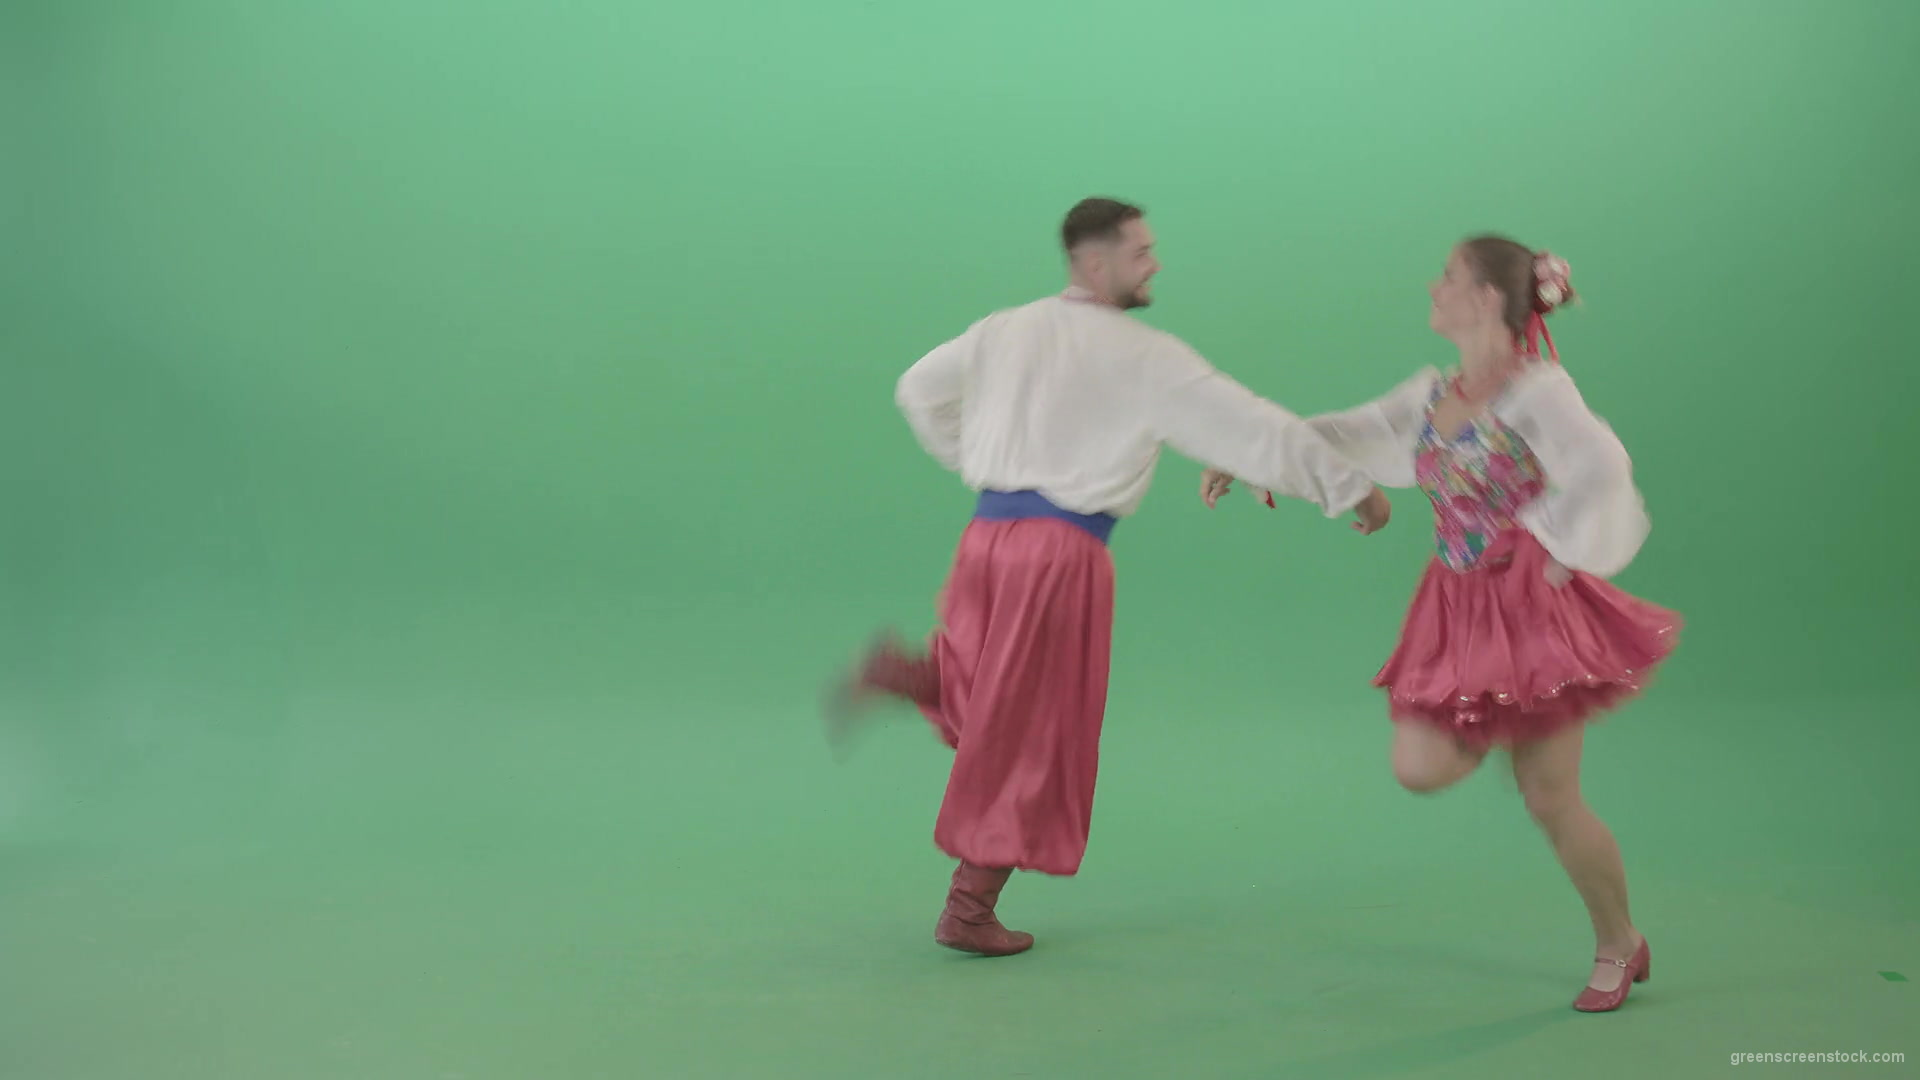 Ukraine-national-dancing-couple-shows-folk-dance-4K-Video-Footage-1920_006 Green Screen Stock